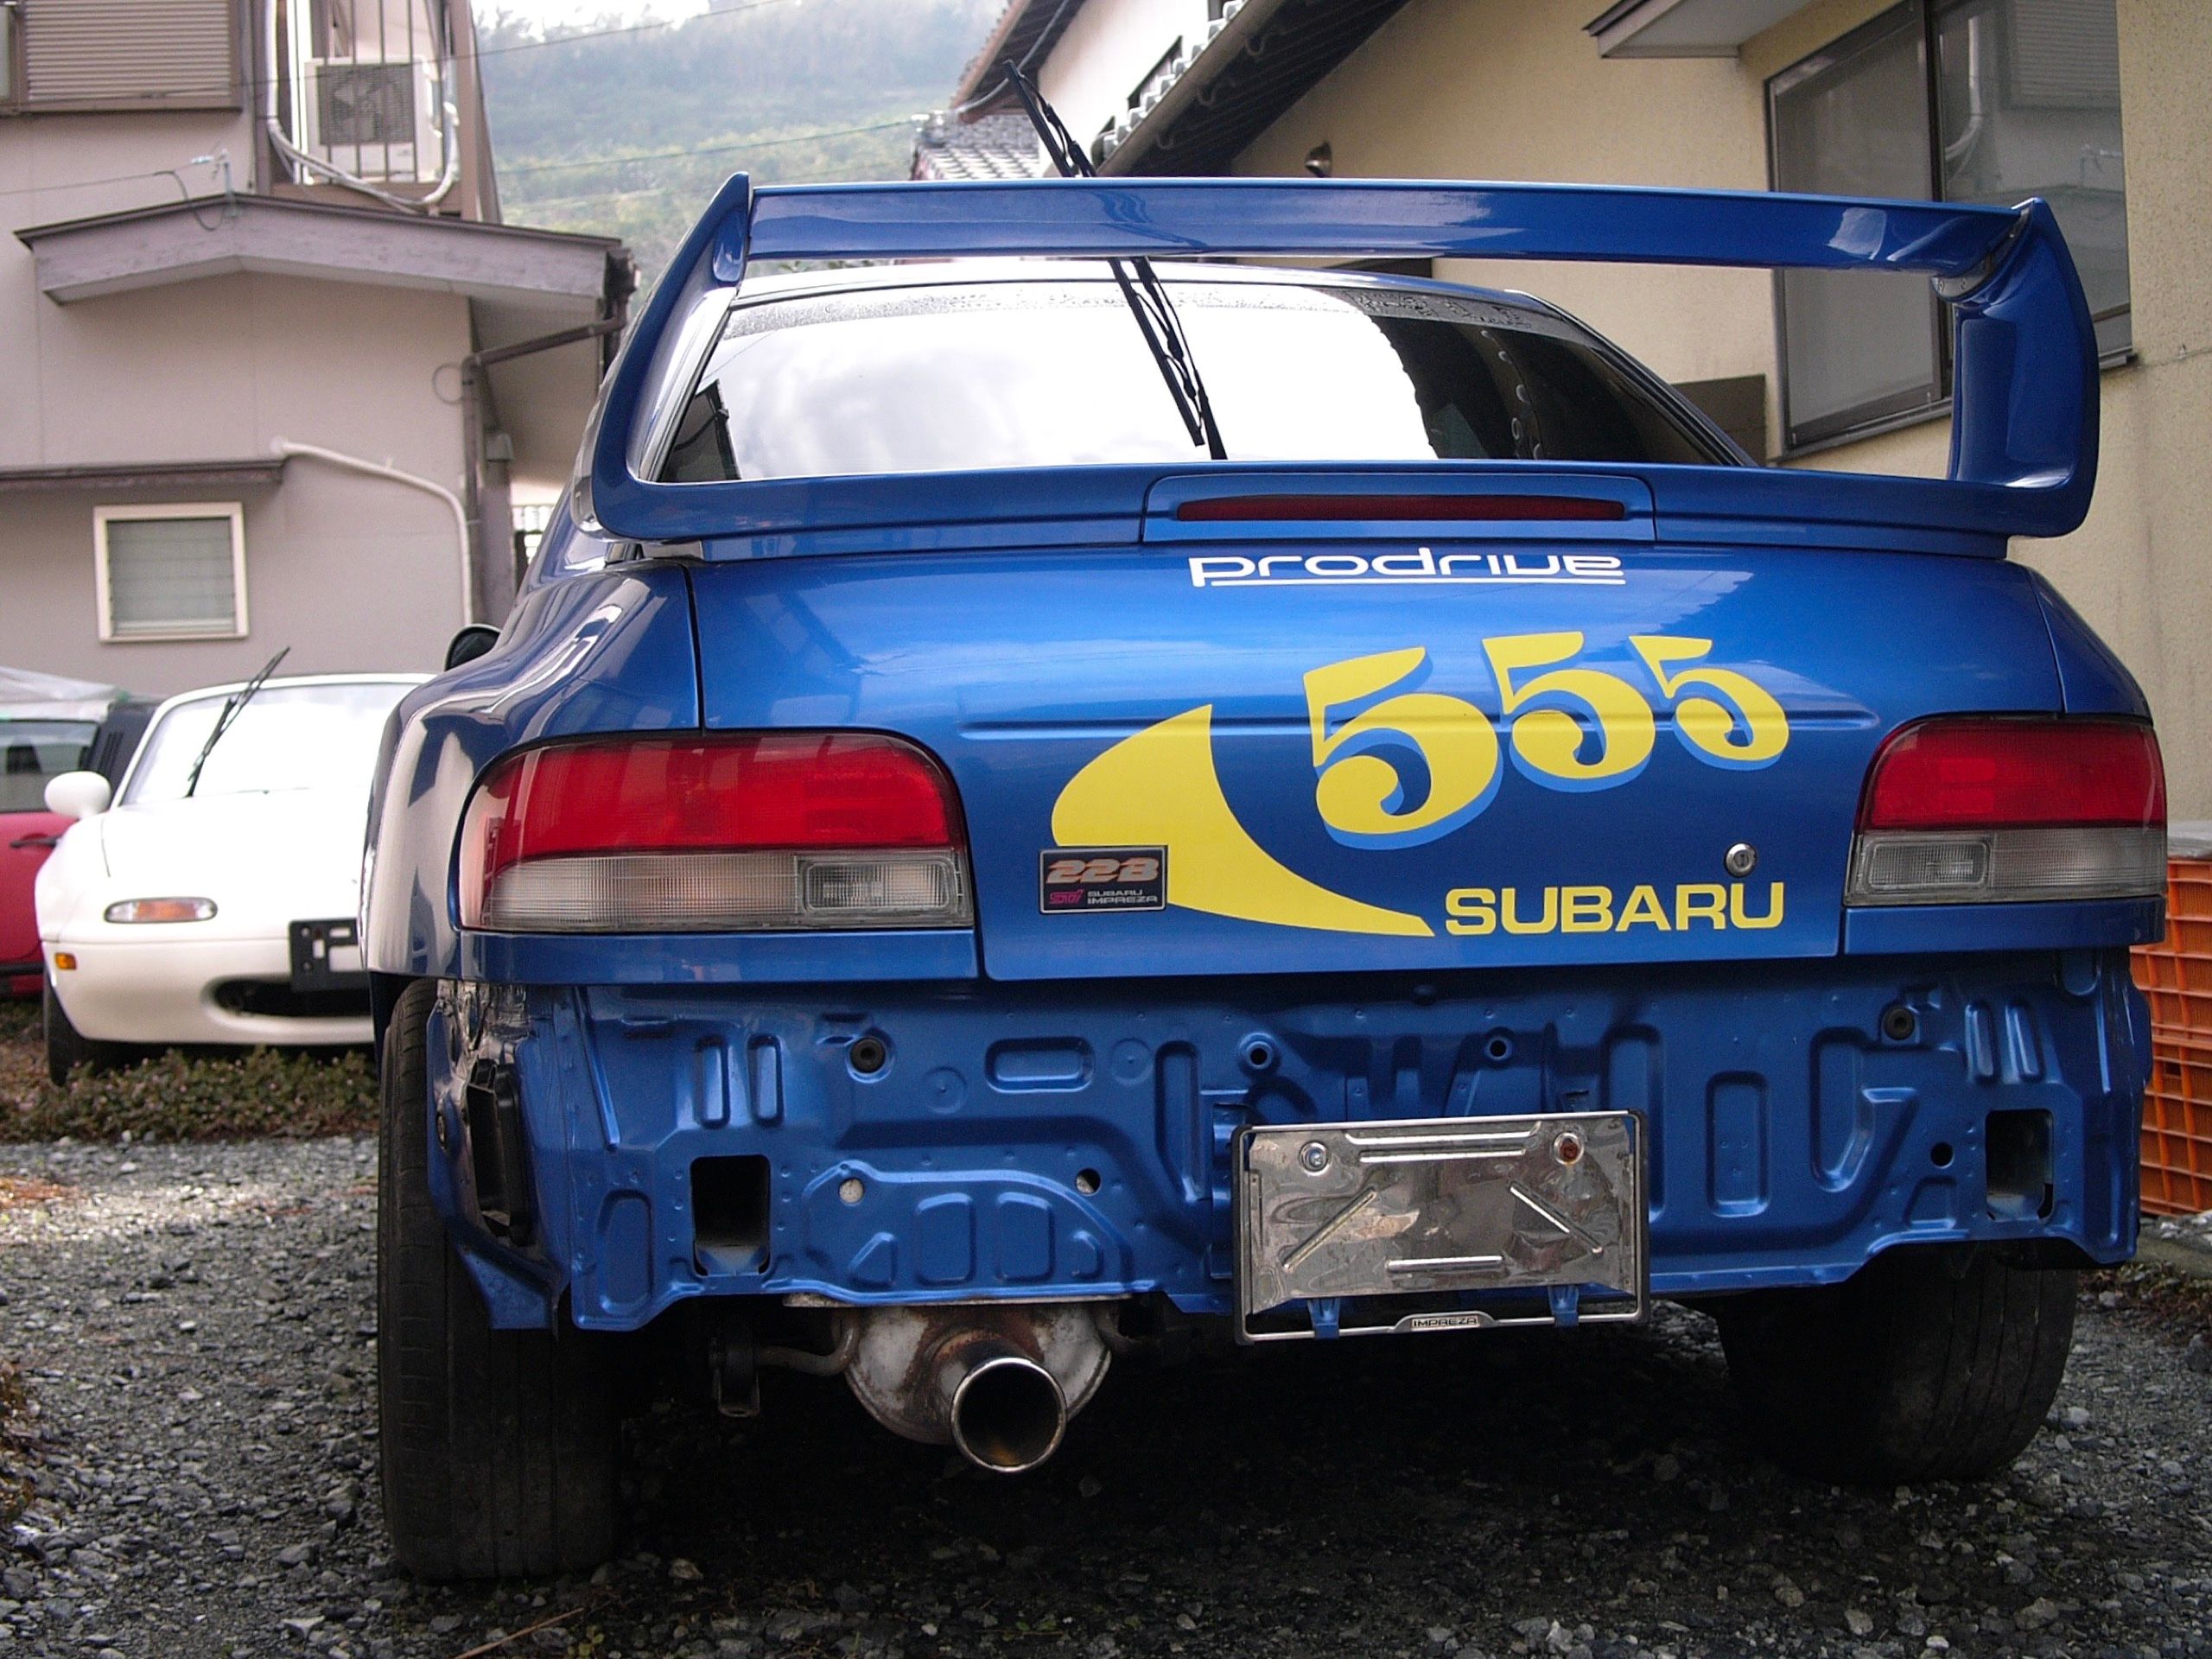 The rear of a Subaru Impreza rally car in Colin McRae’s 555 livery.